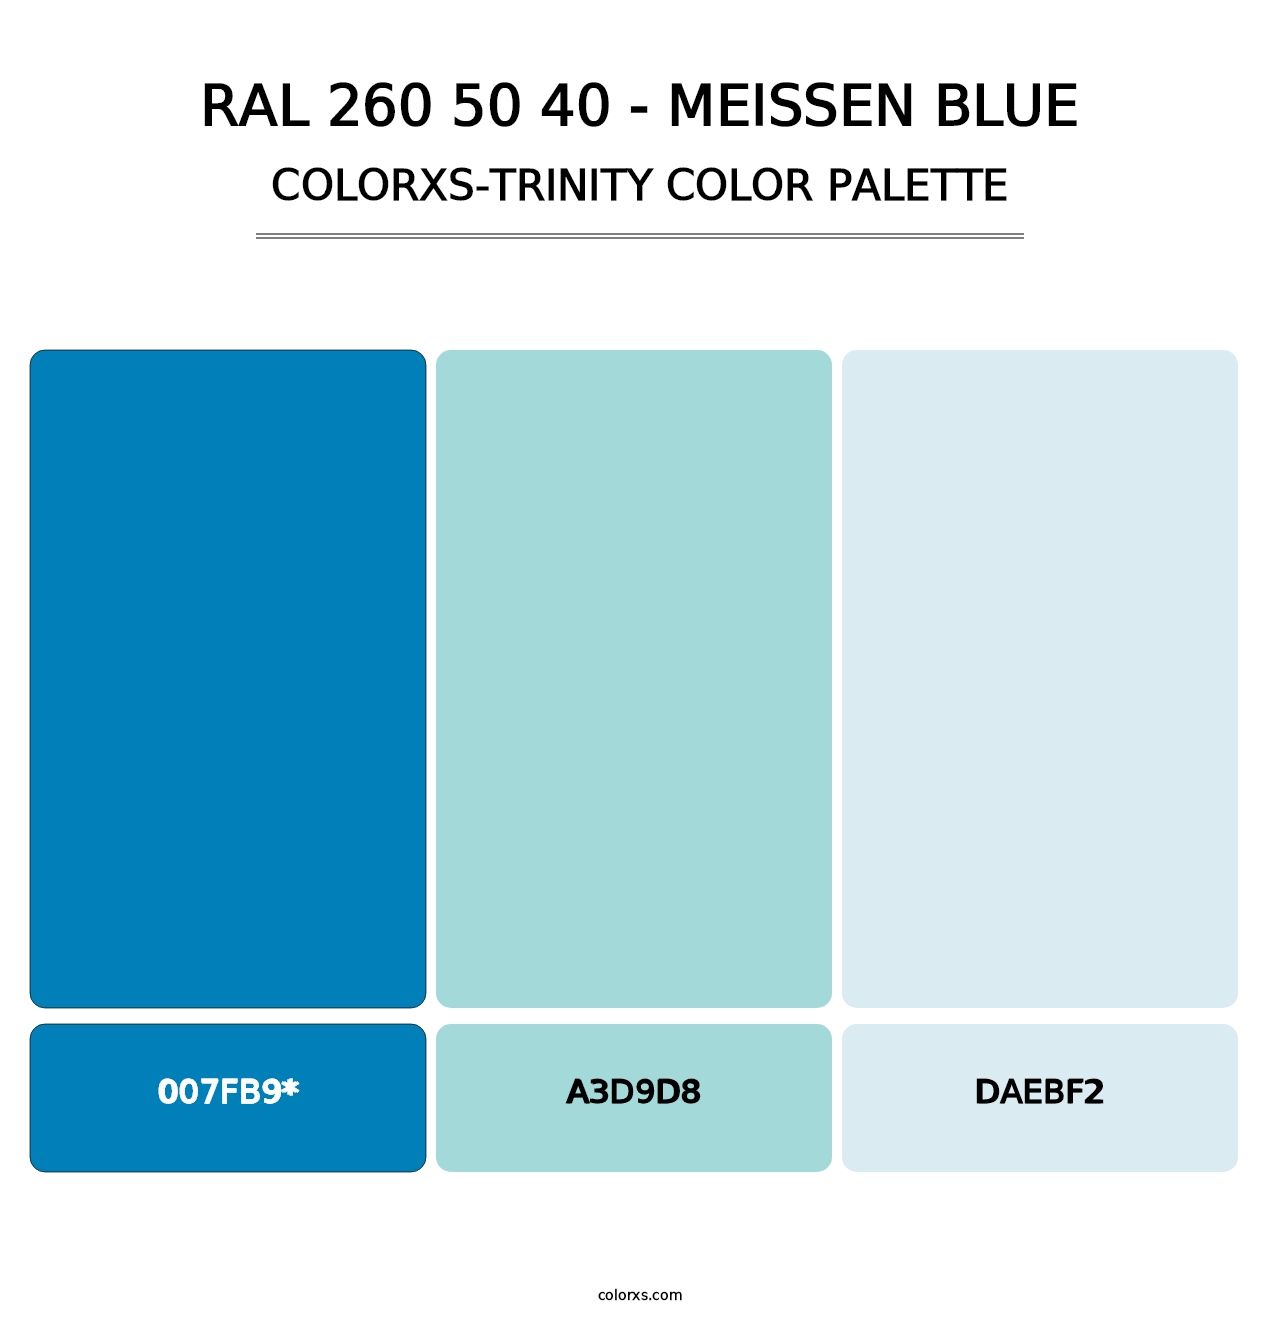 RAL 260 50 40 - Meissen Blue - Colorxs Trinity Palette